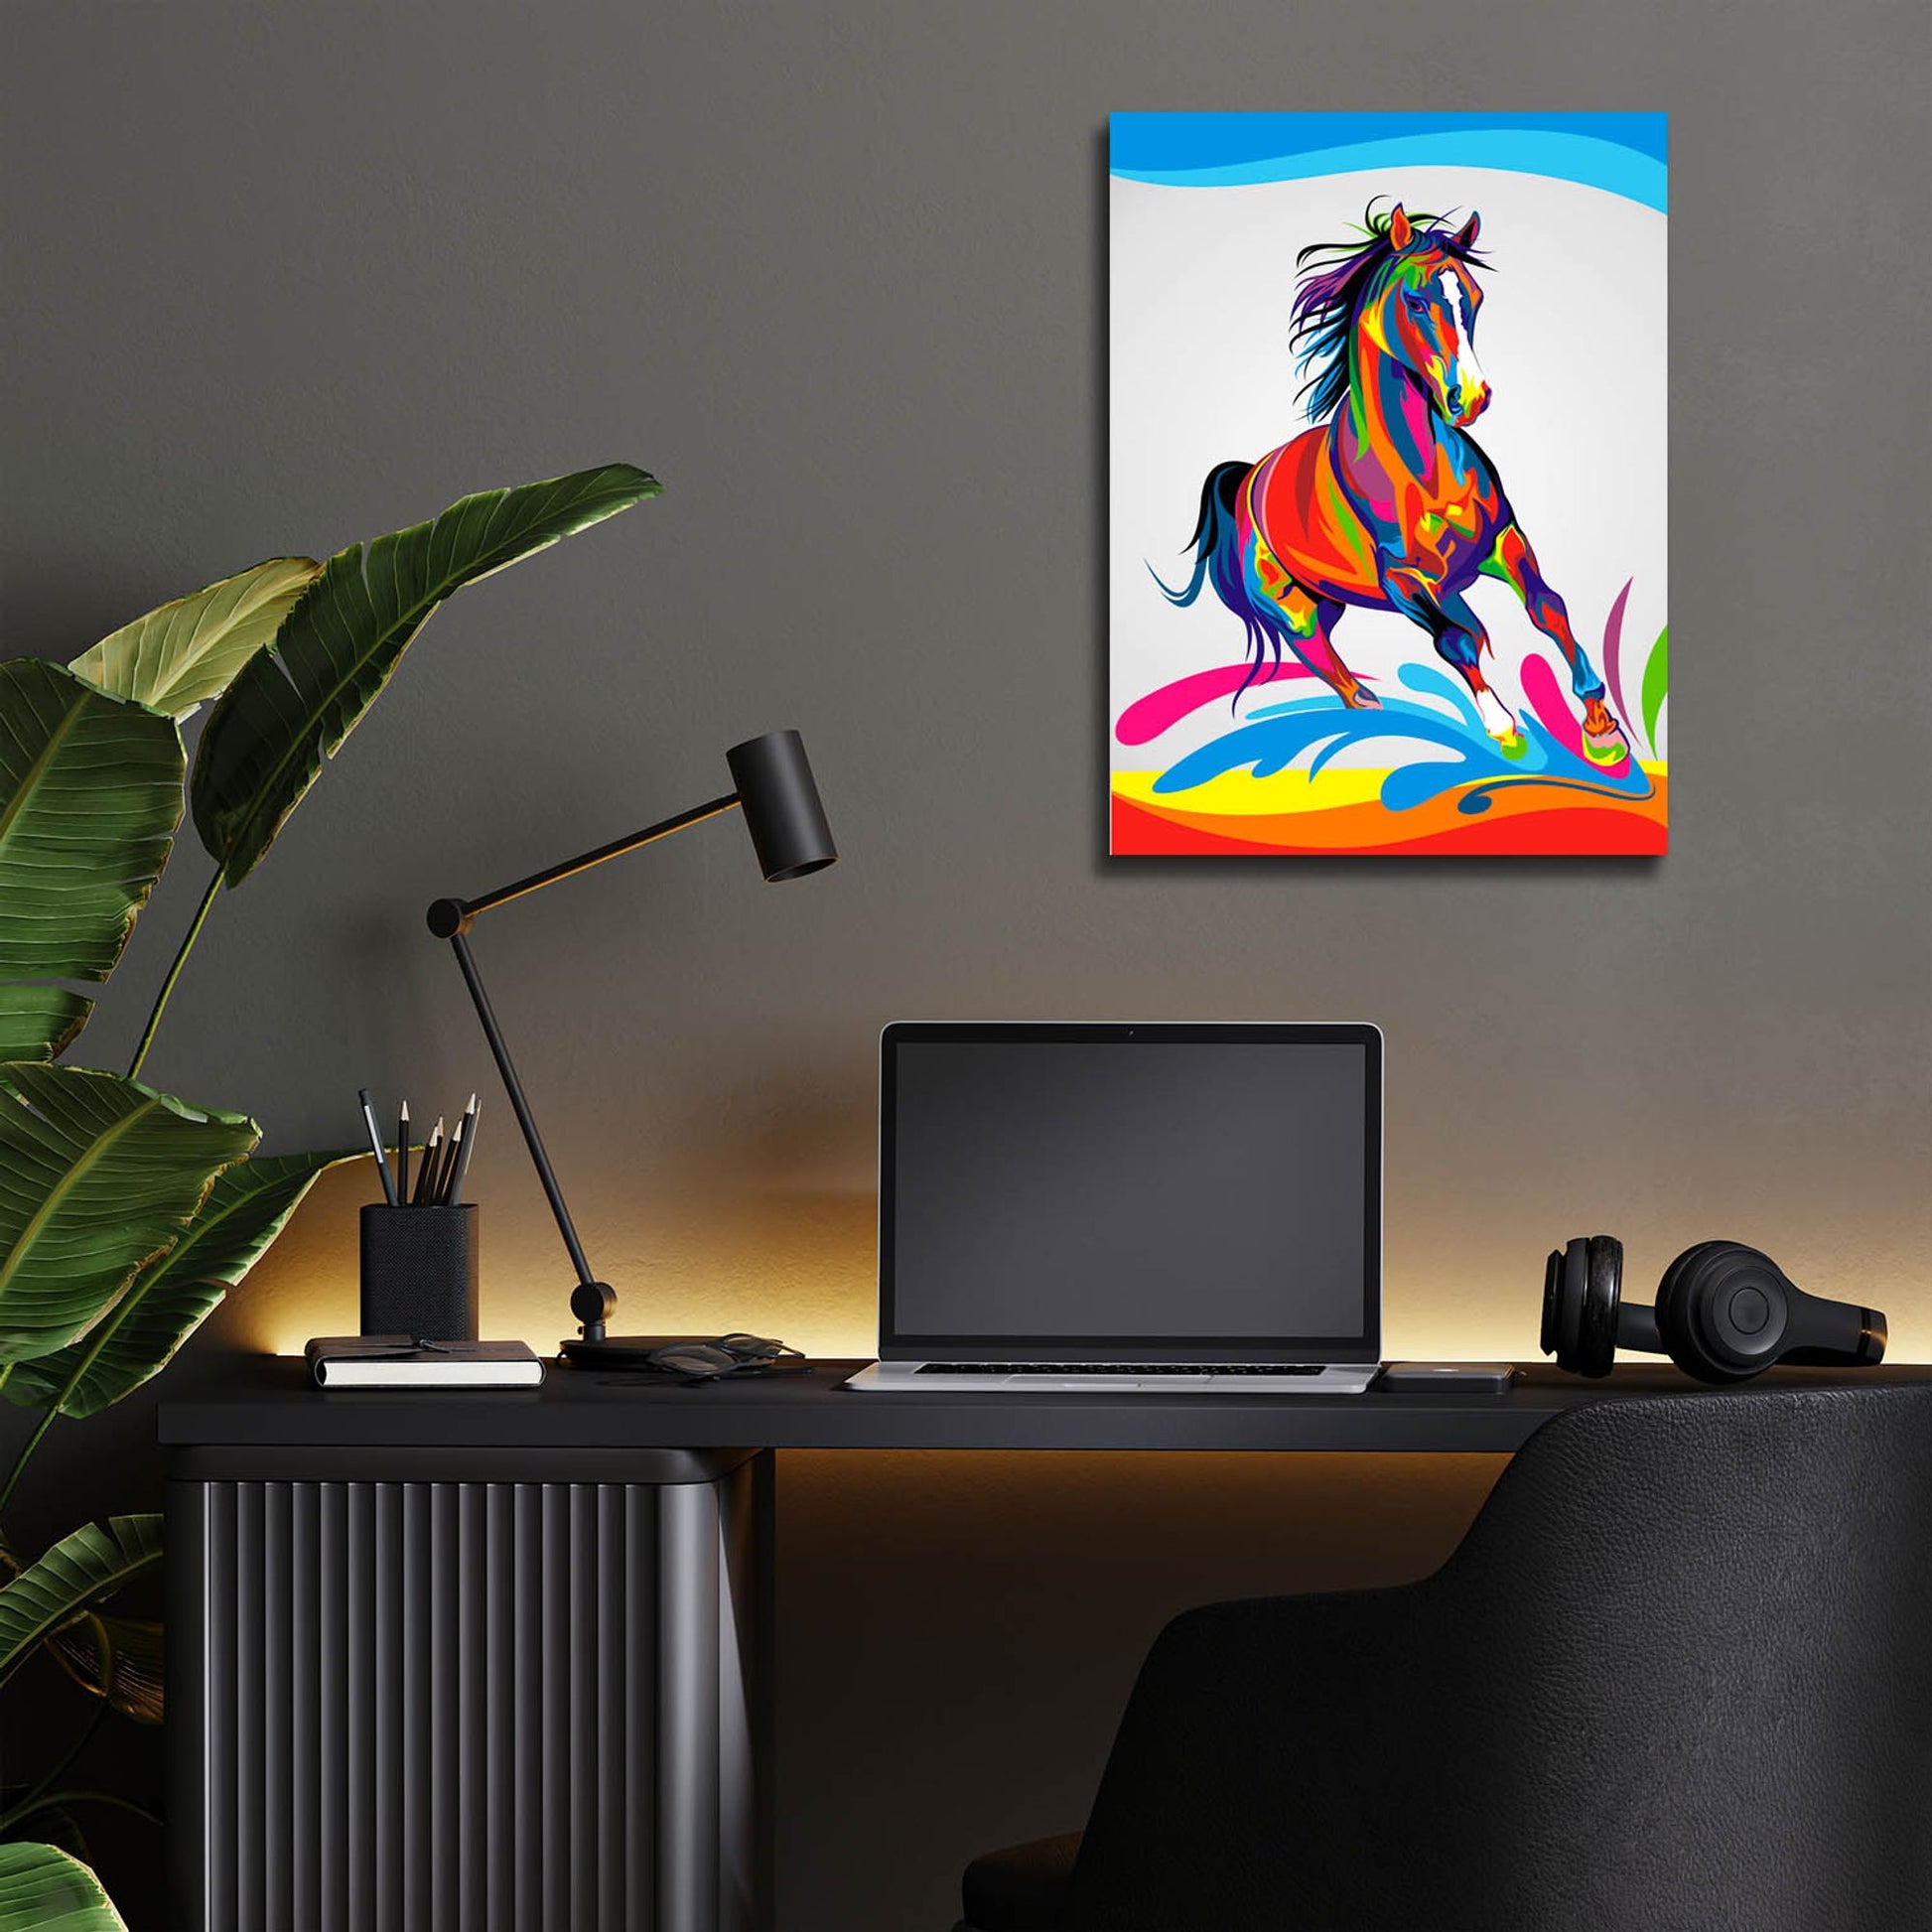 Epic Art 'Horse' by Bob Weer, Acrylic Glass Wall Art,12x16